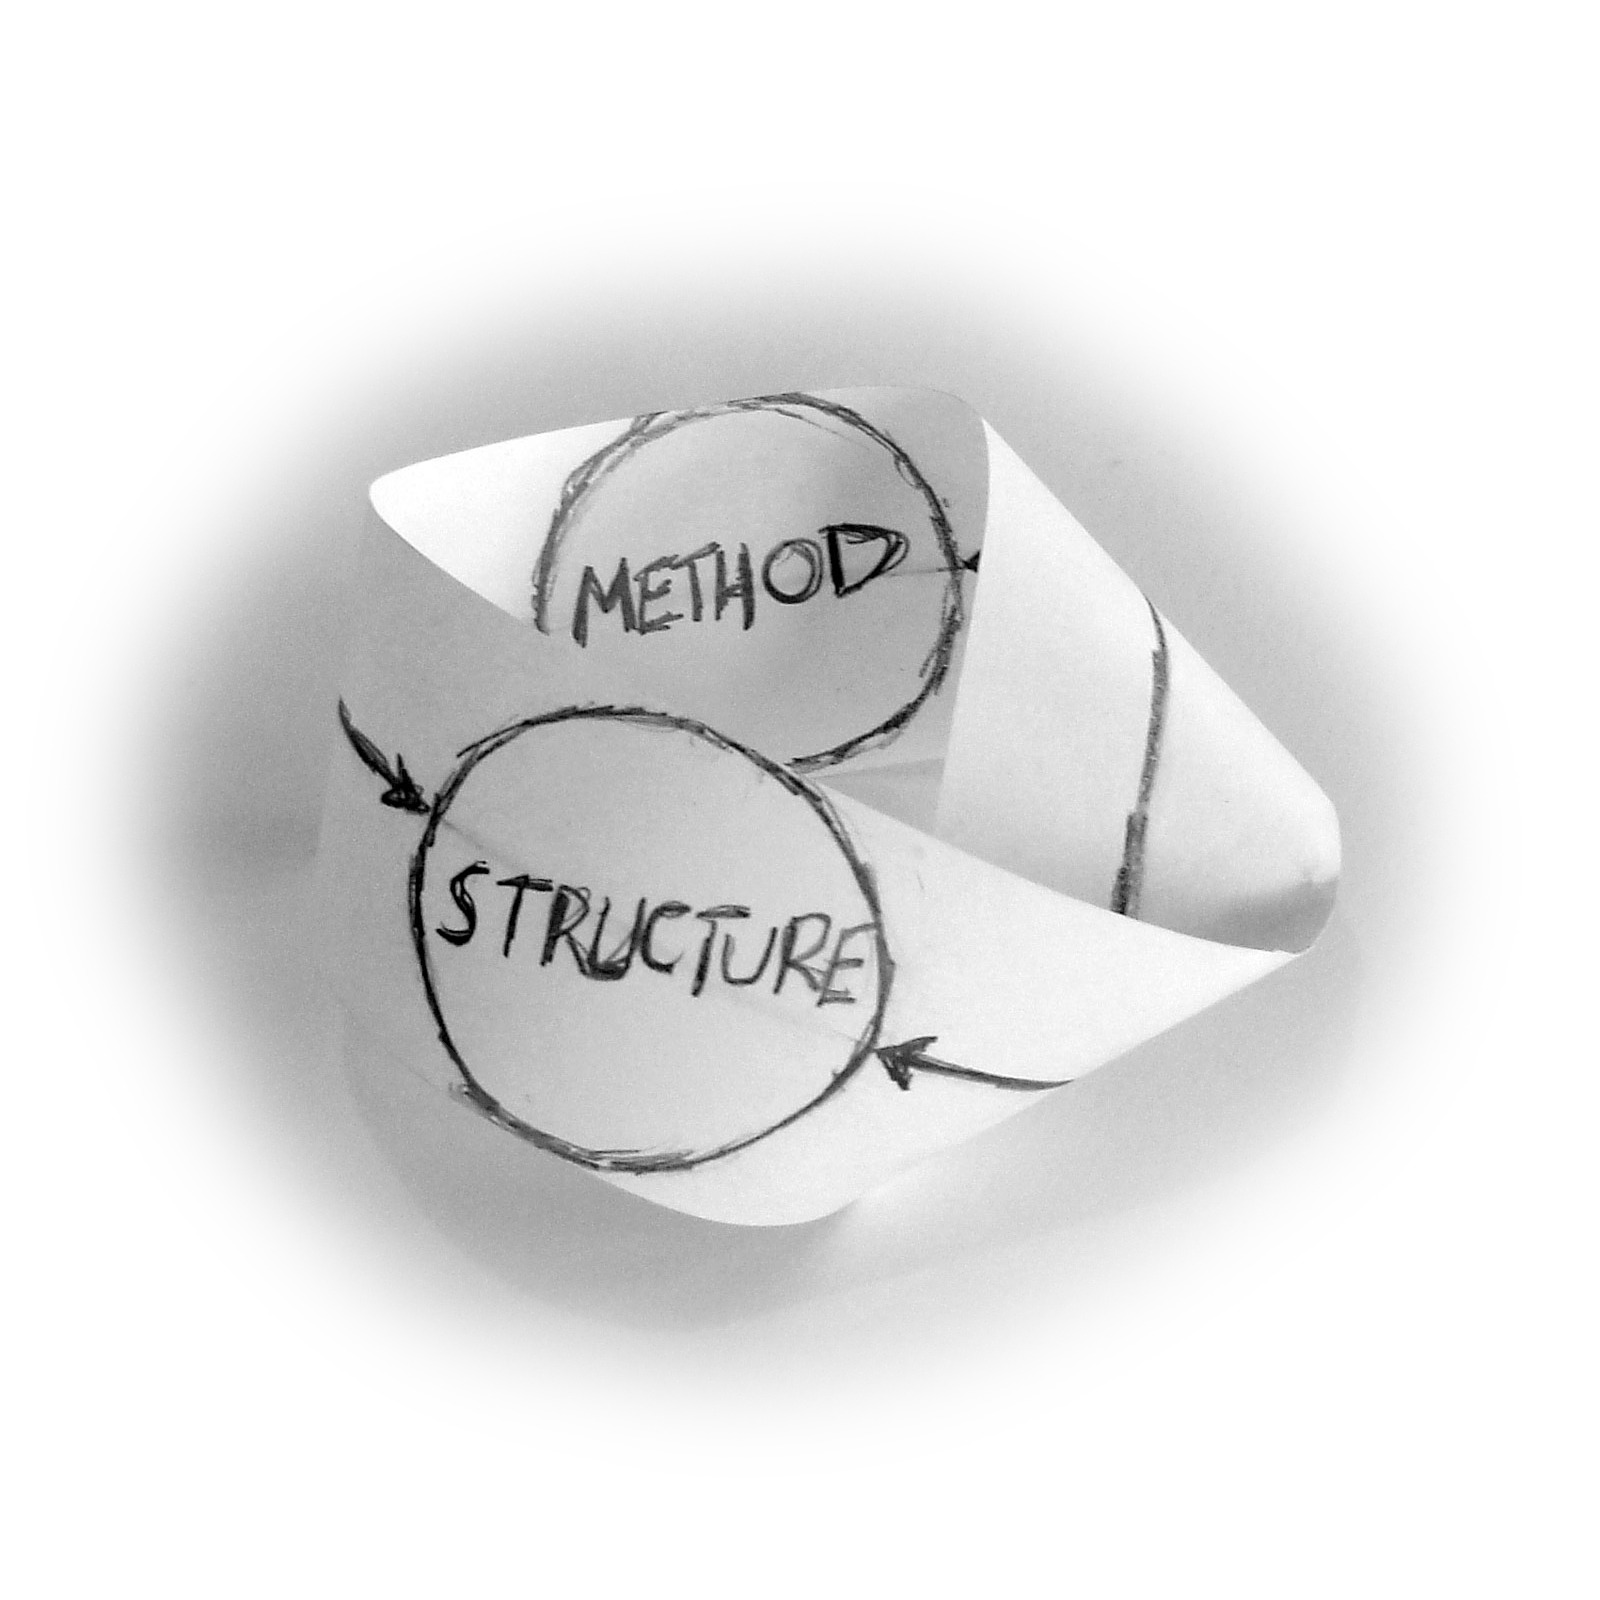 Method & Structure Möbius strip